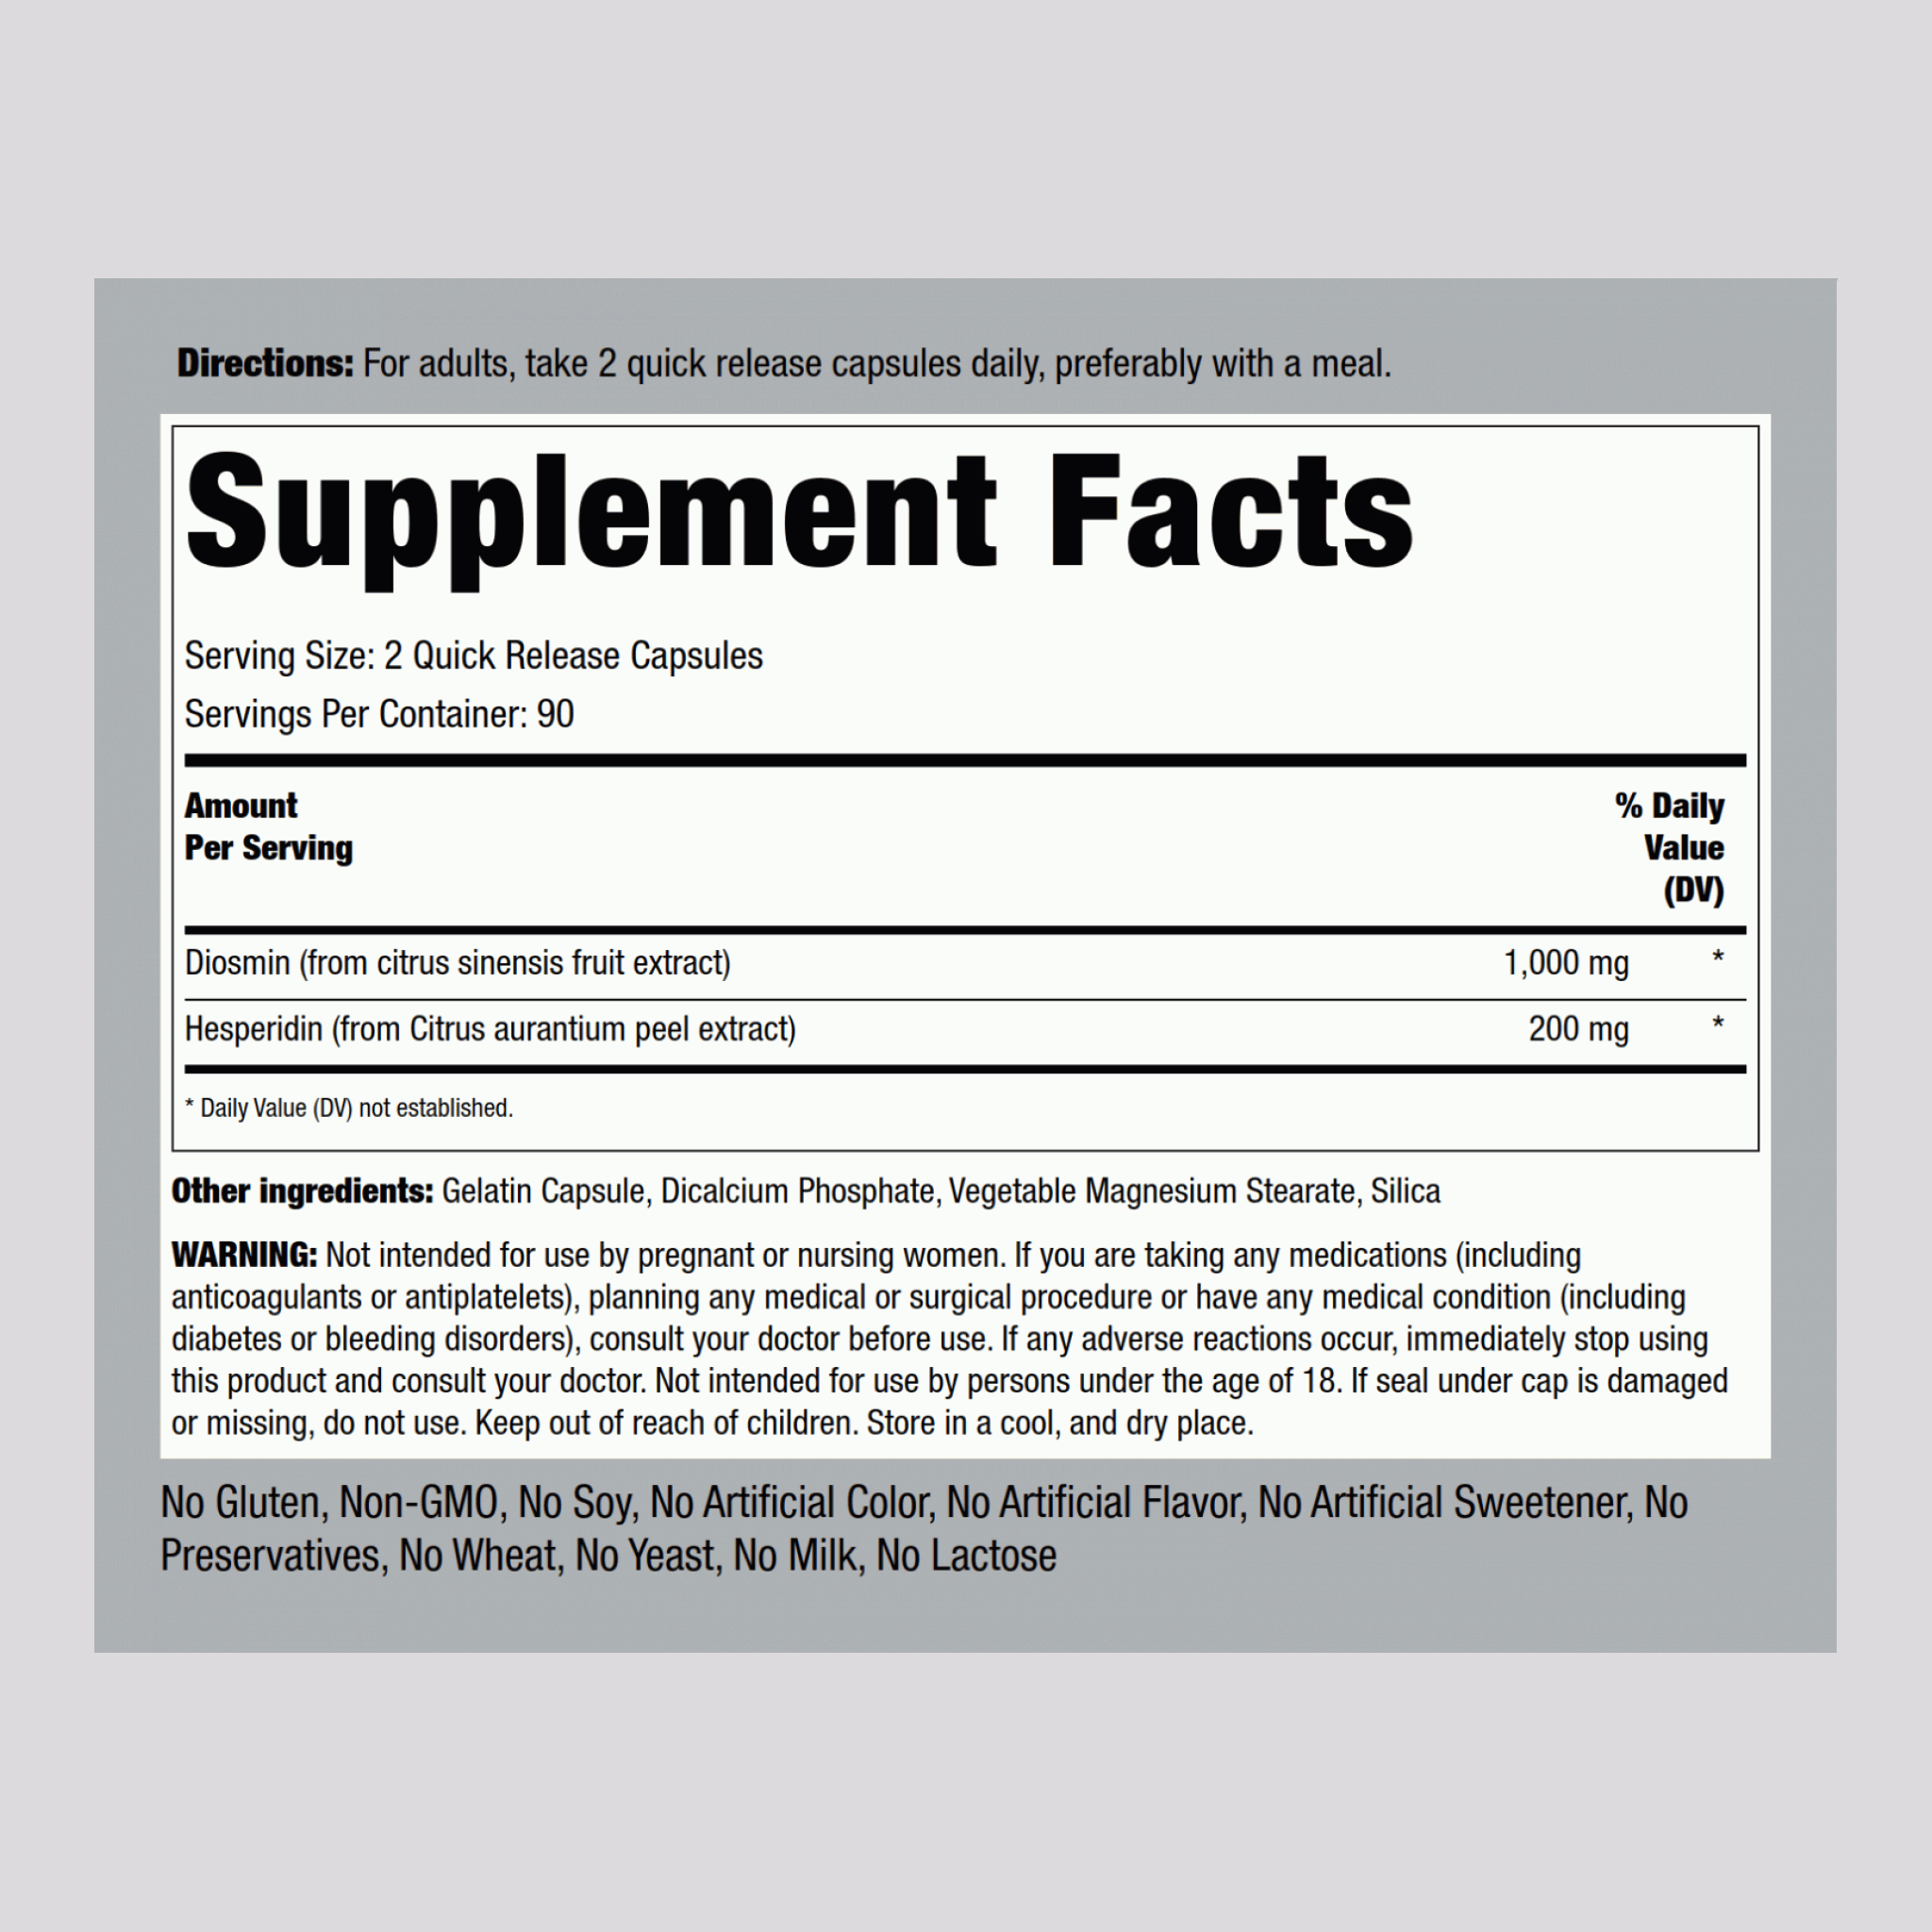 Diosmin w/ Hesperidin, 1200 mg (per serving), 180 Quick Release Capsules, 2  Bottles